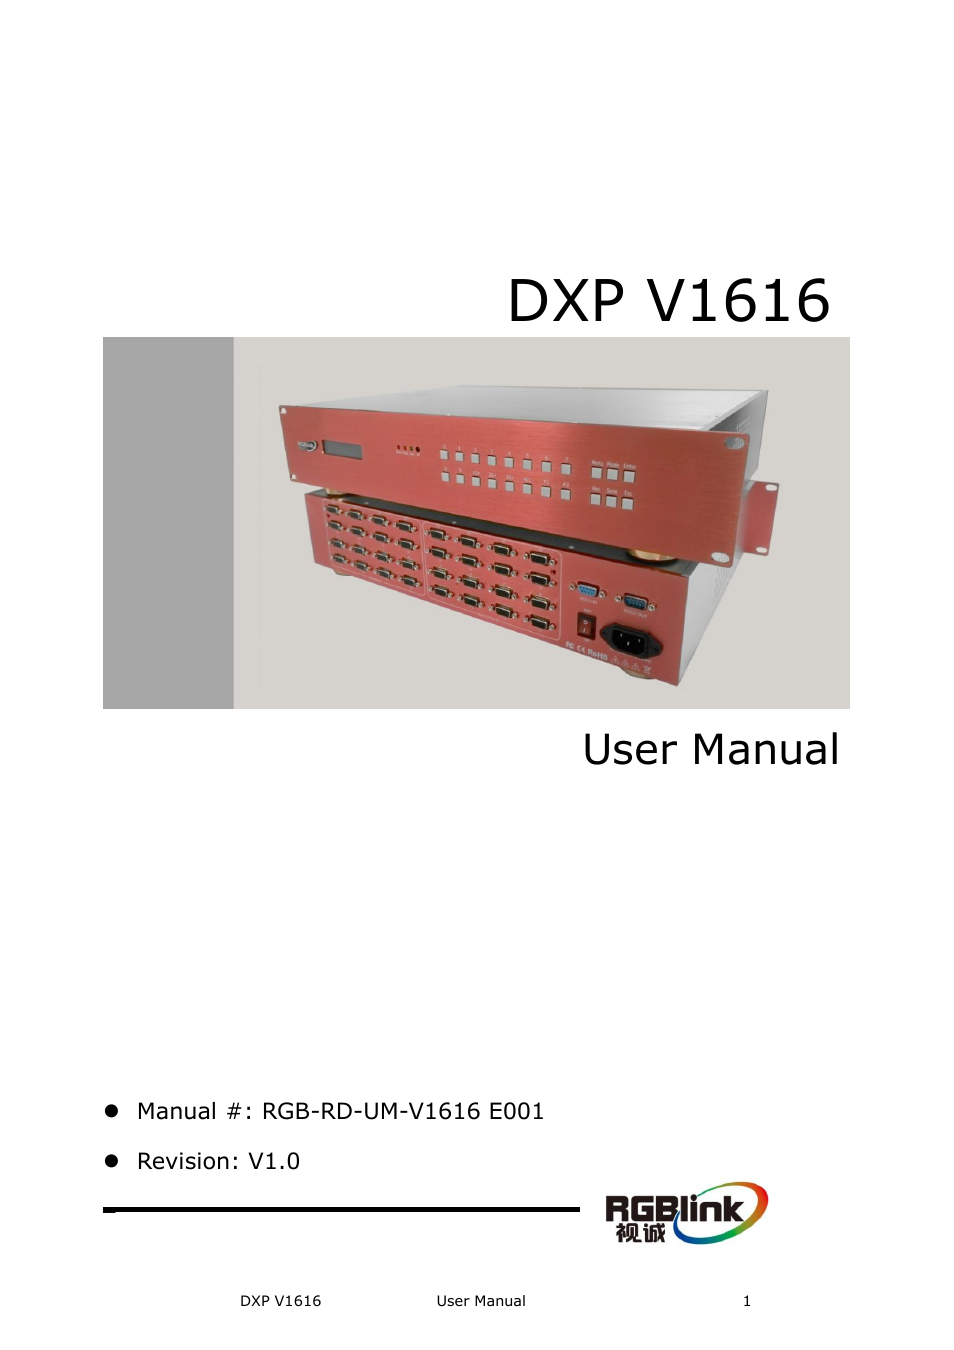 DXP A1616 User Manual